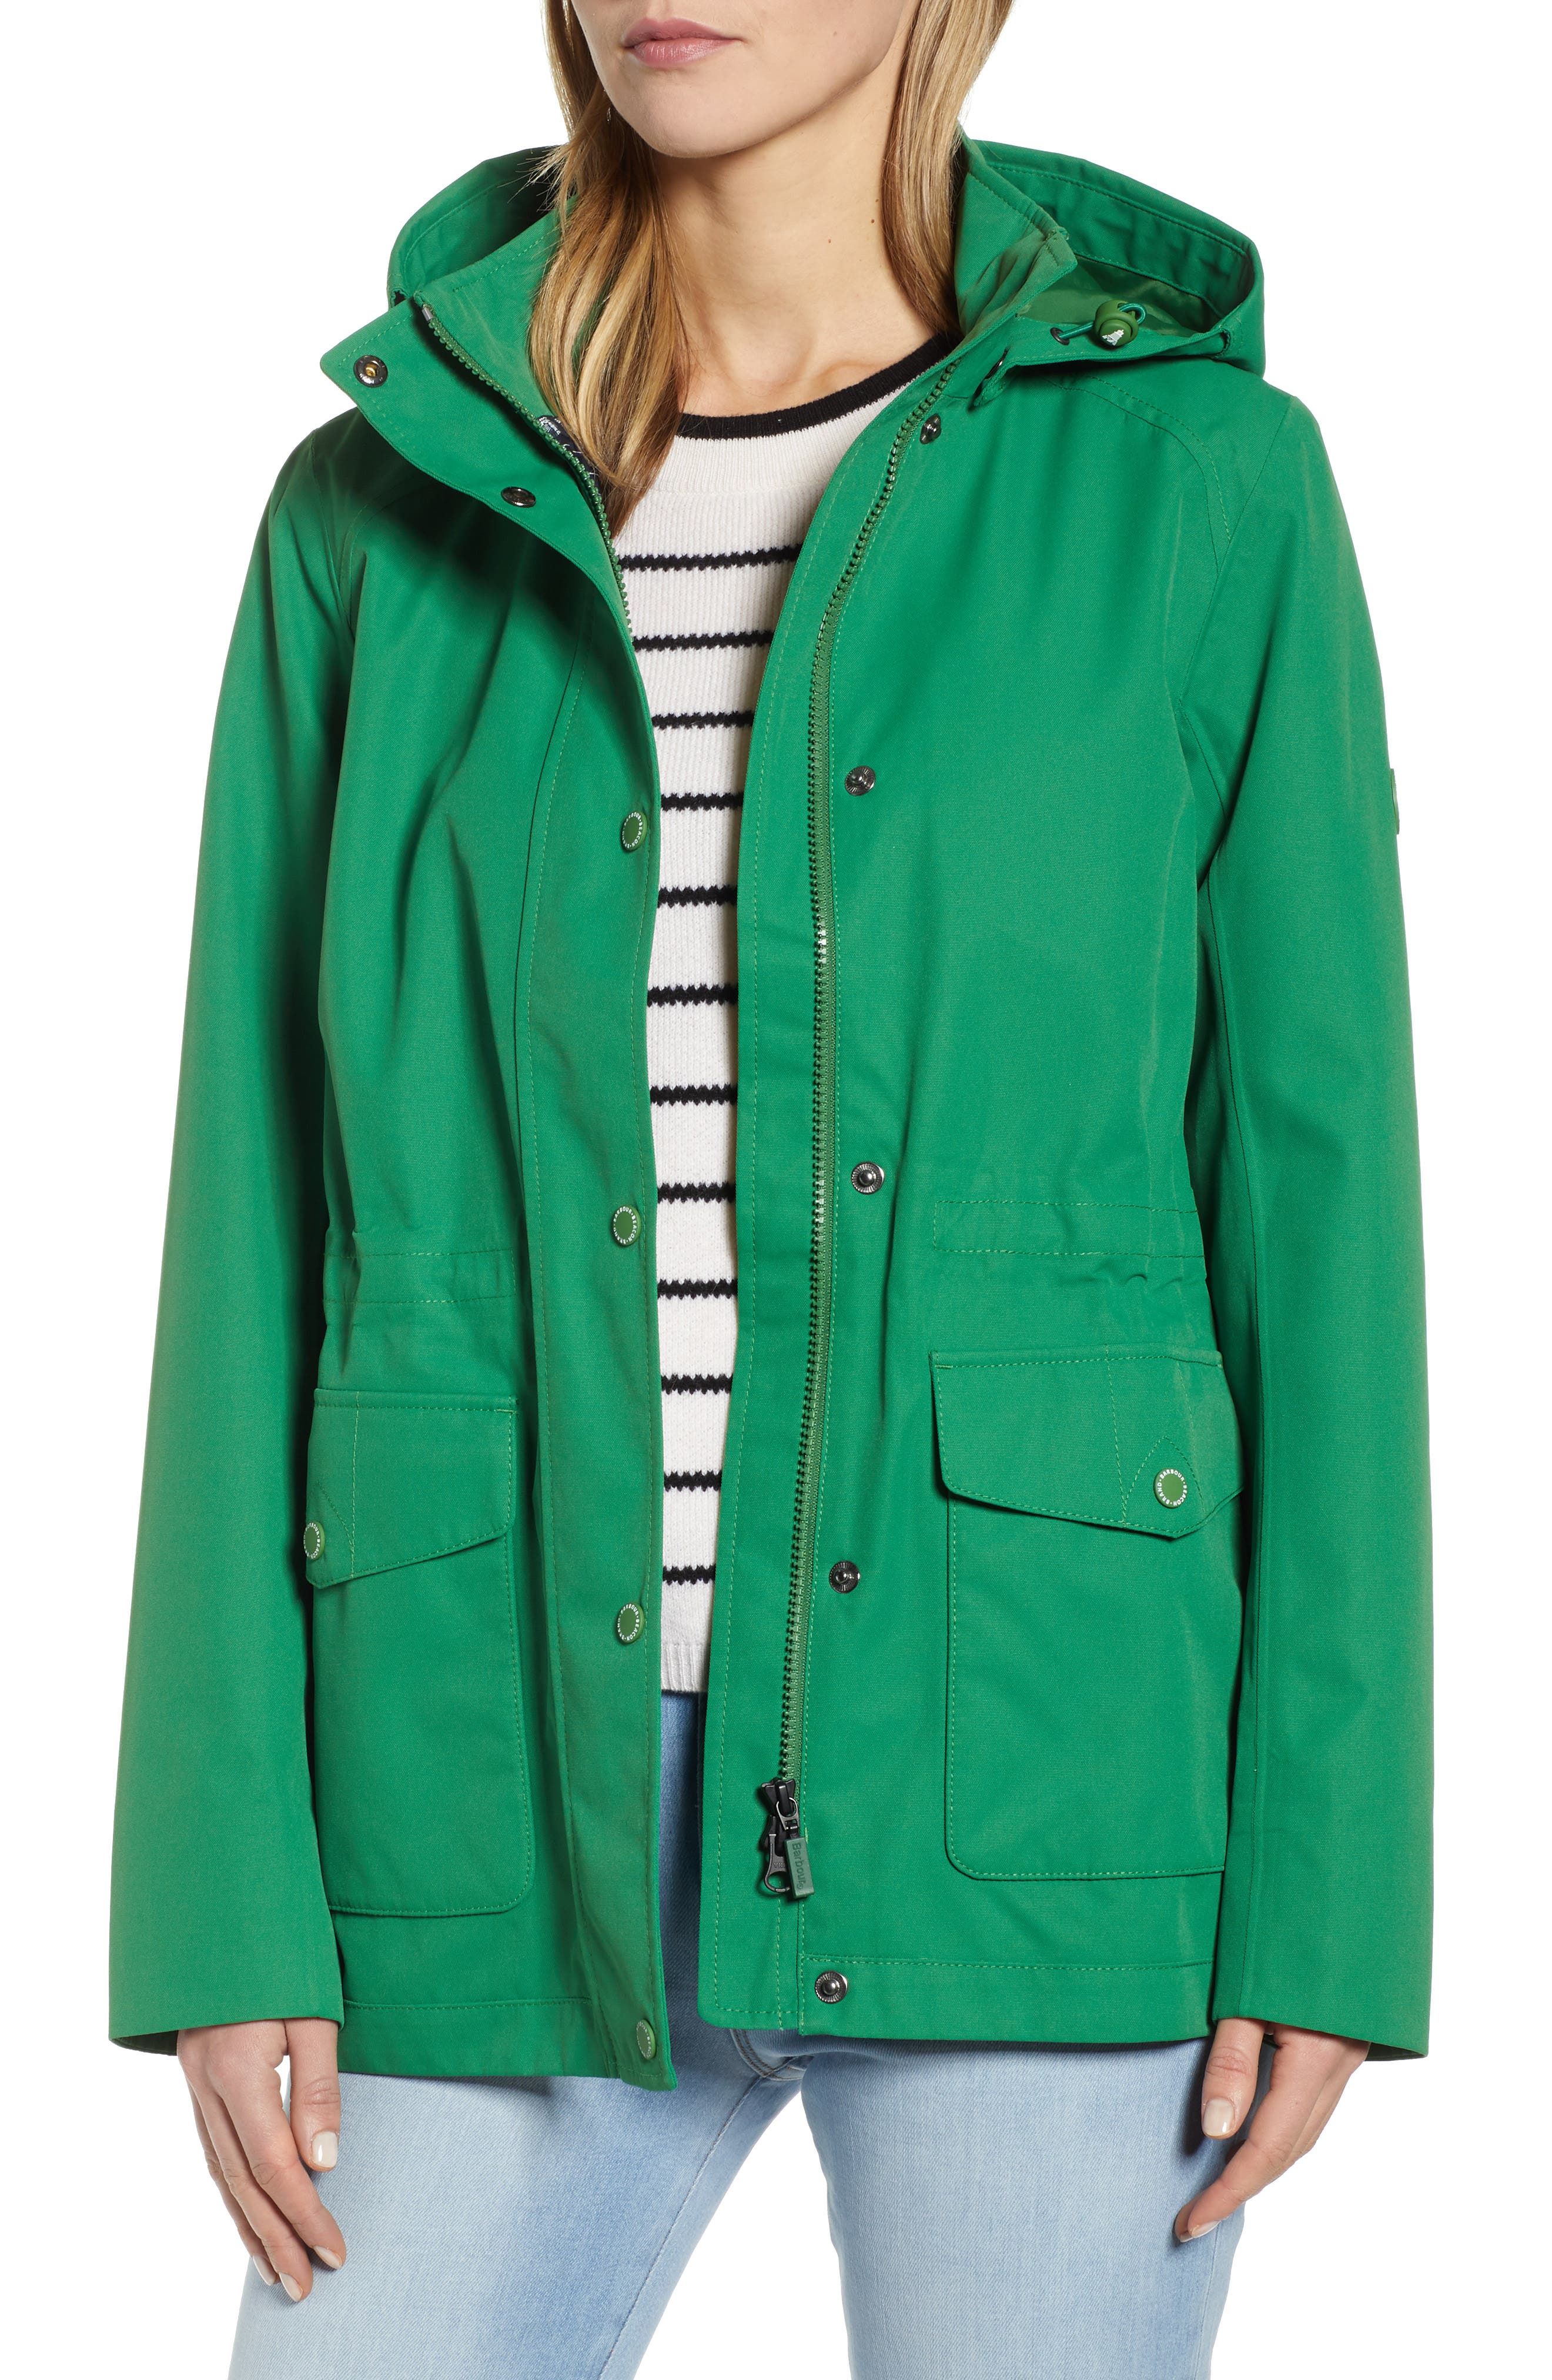 barbour green raincoat